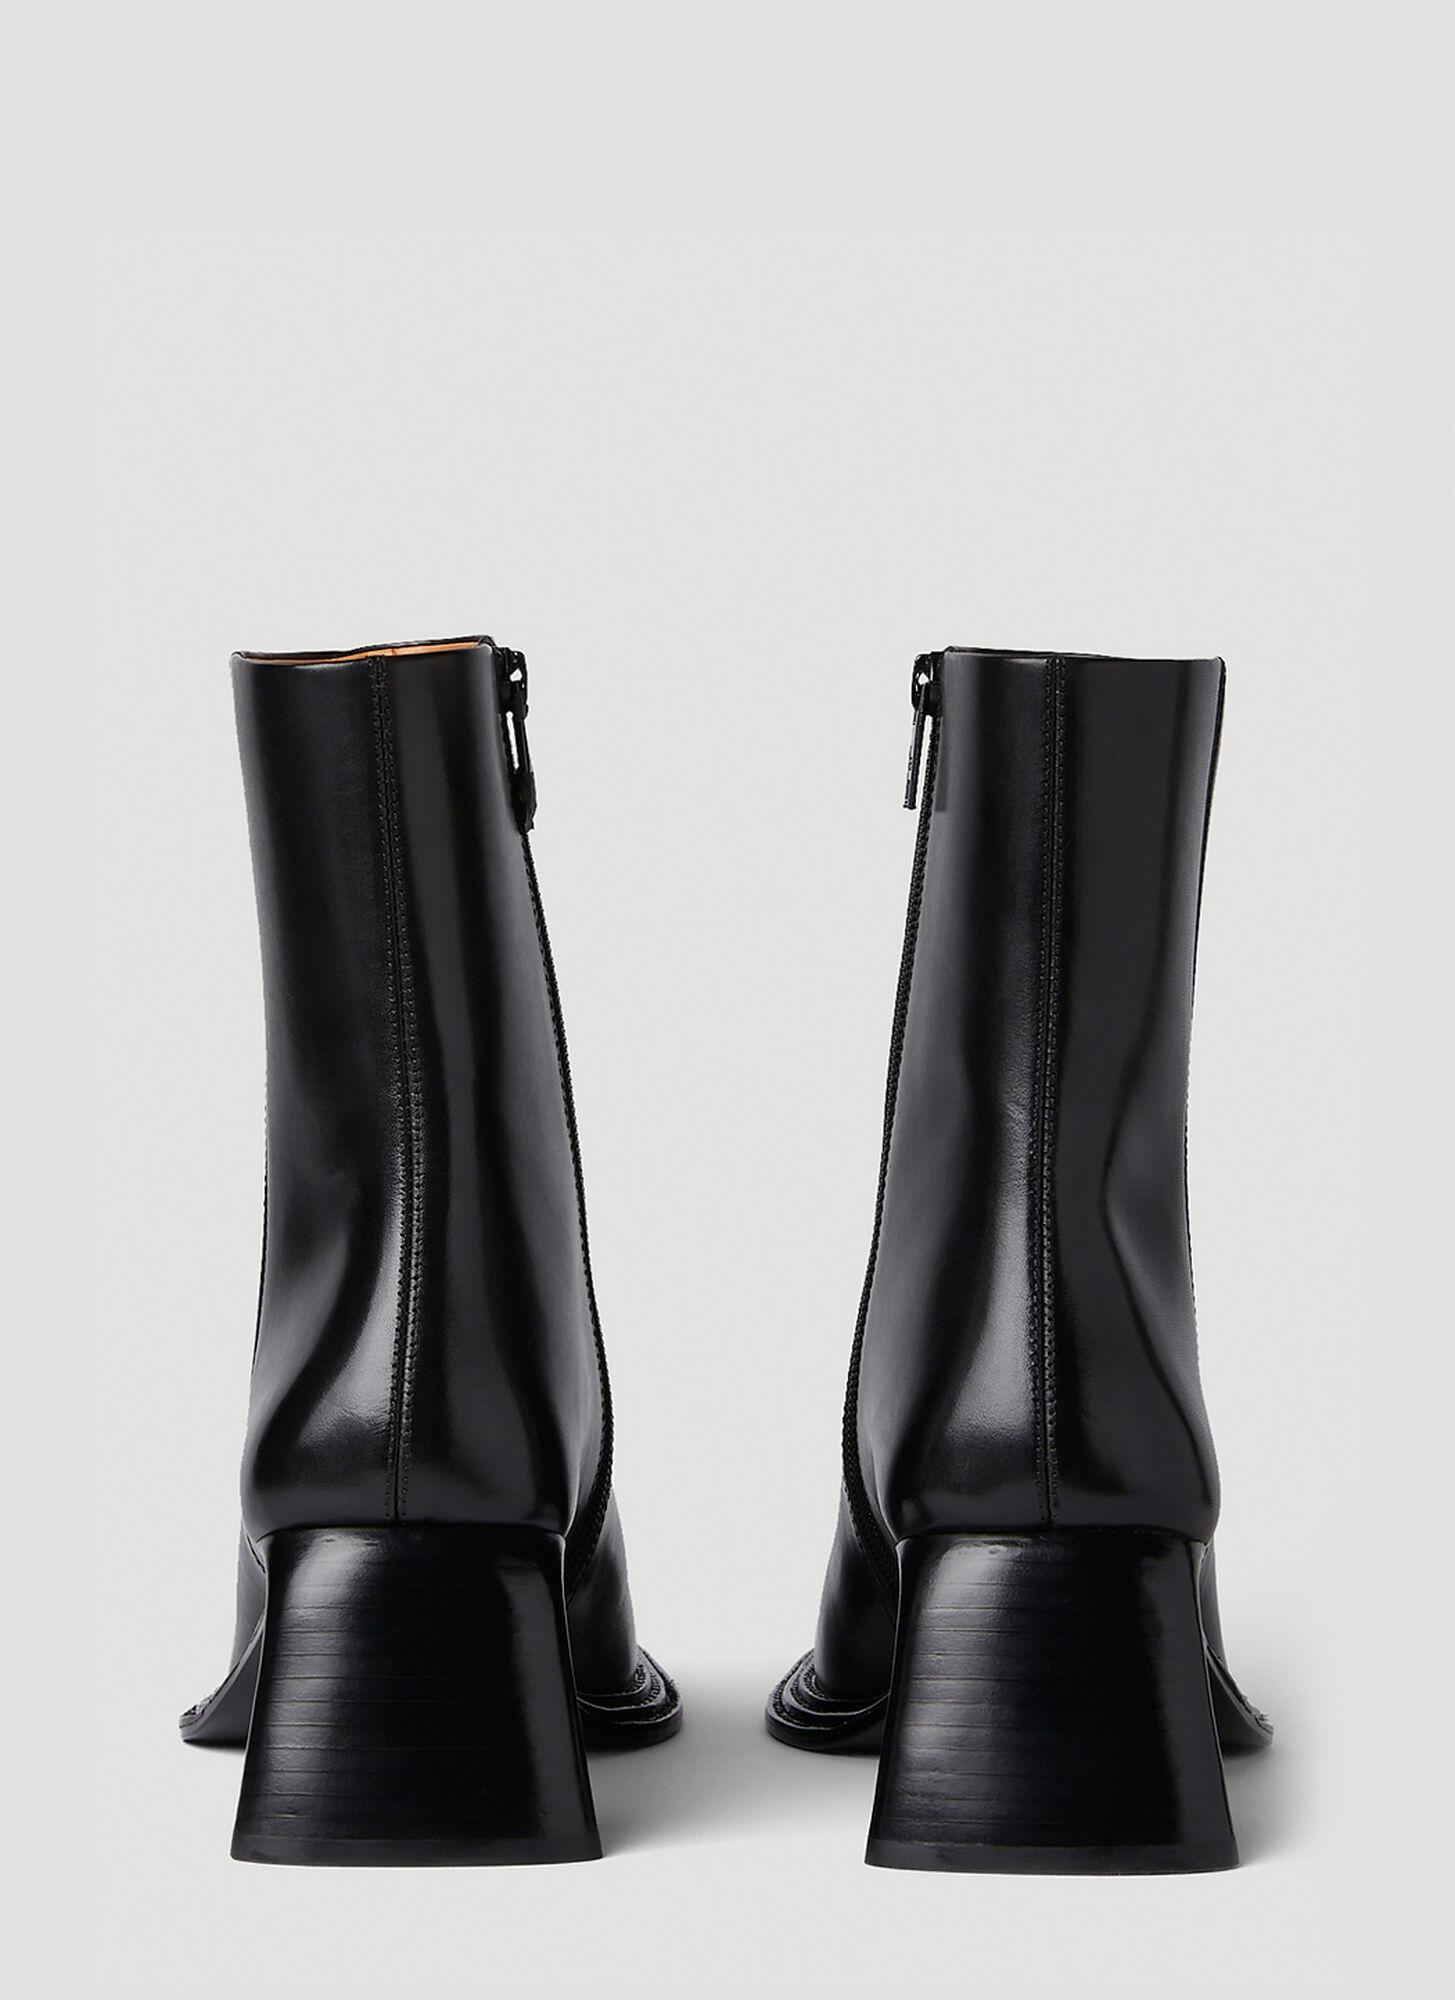 Alexander Wang Booker 60 Boots in Black | Lyst